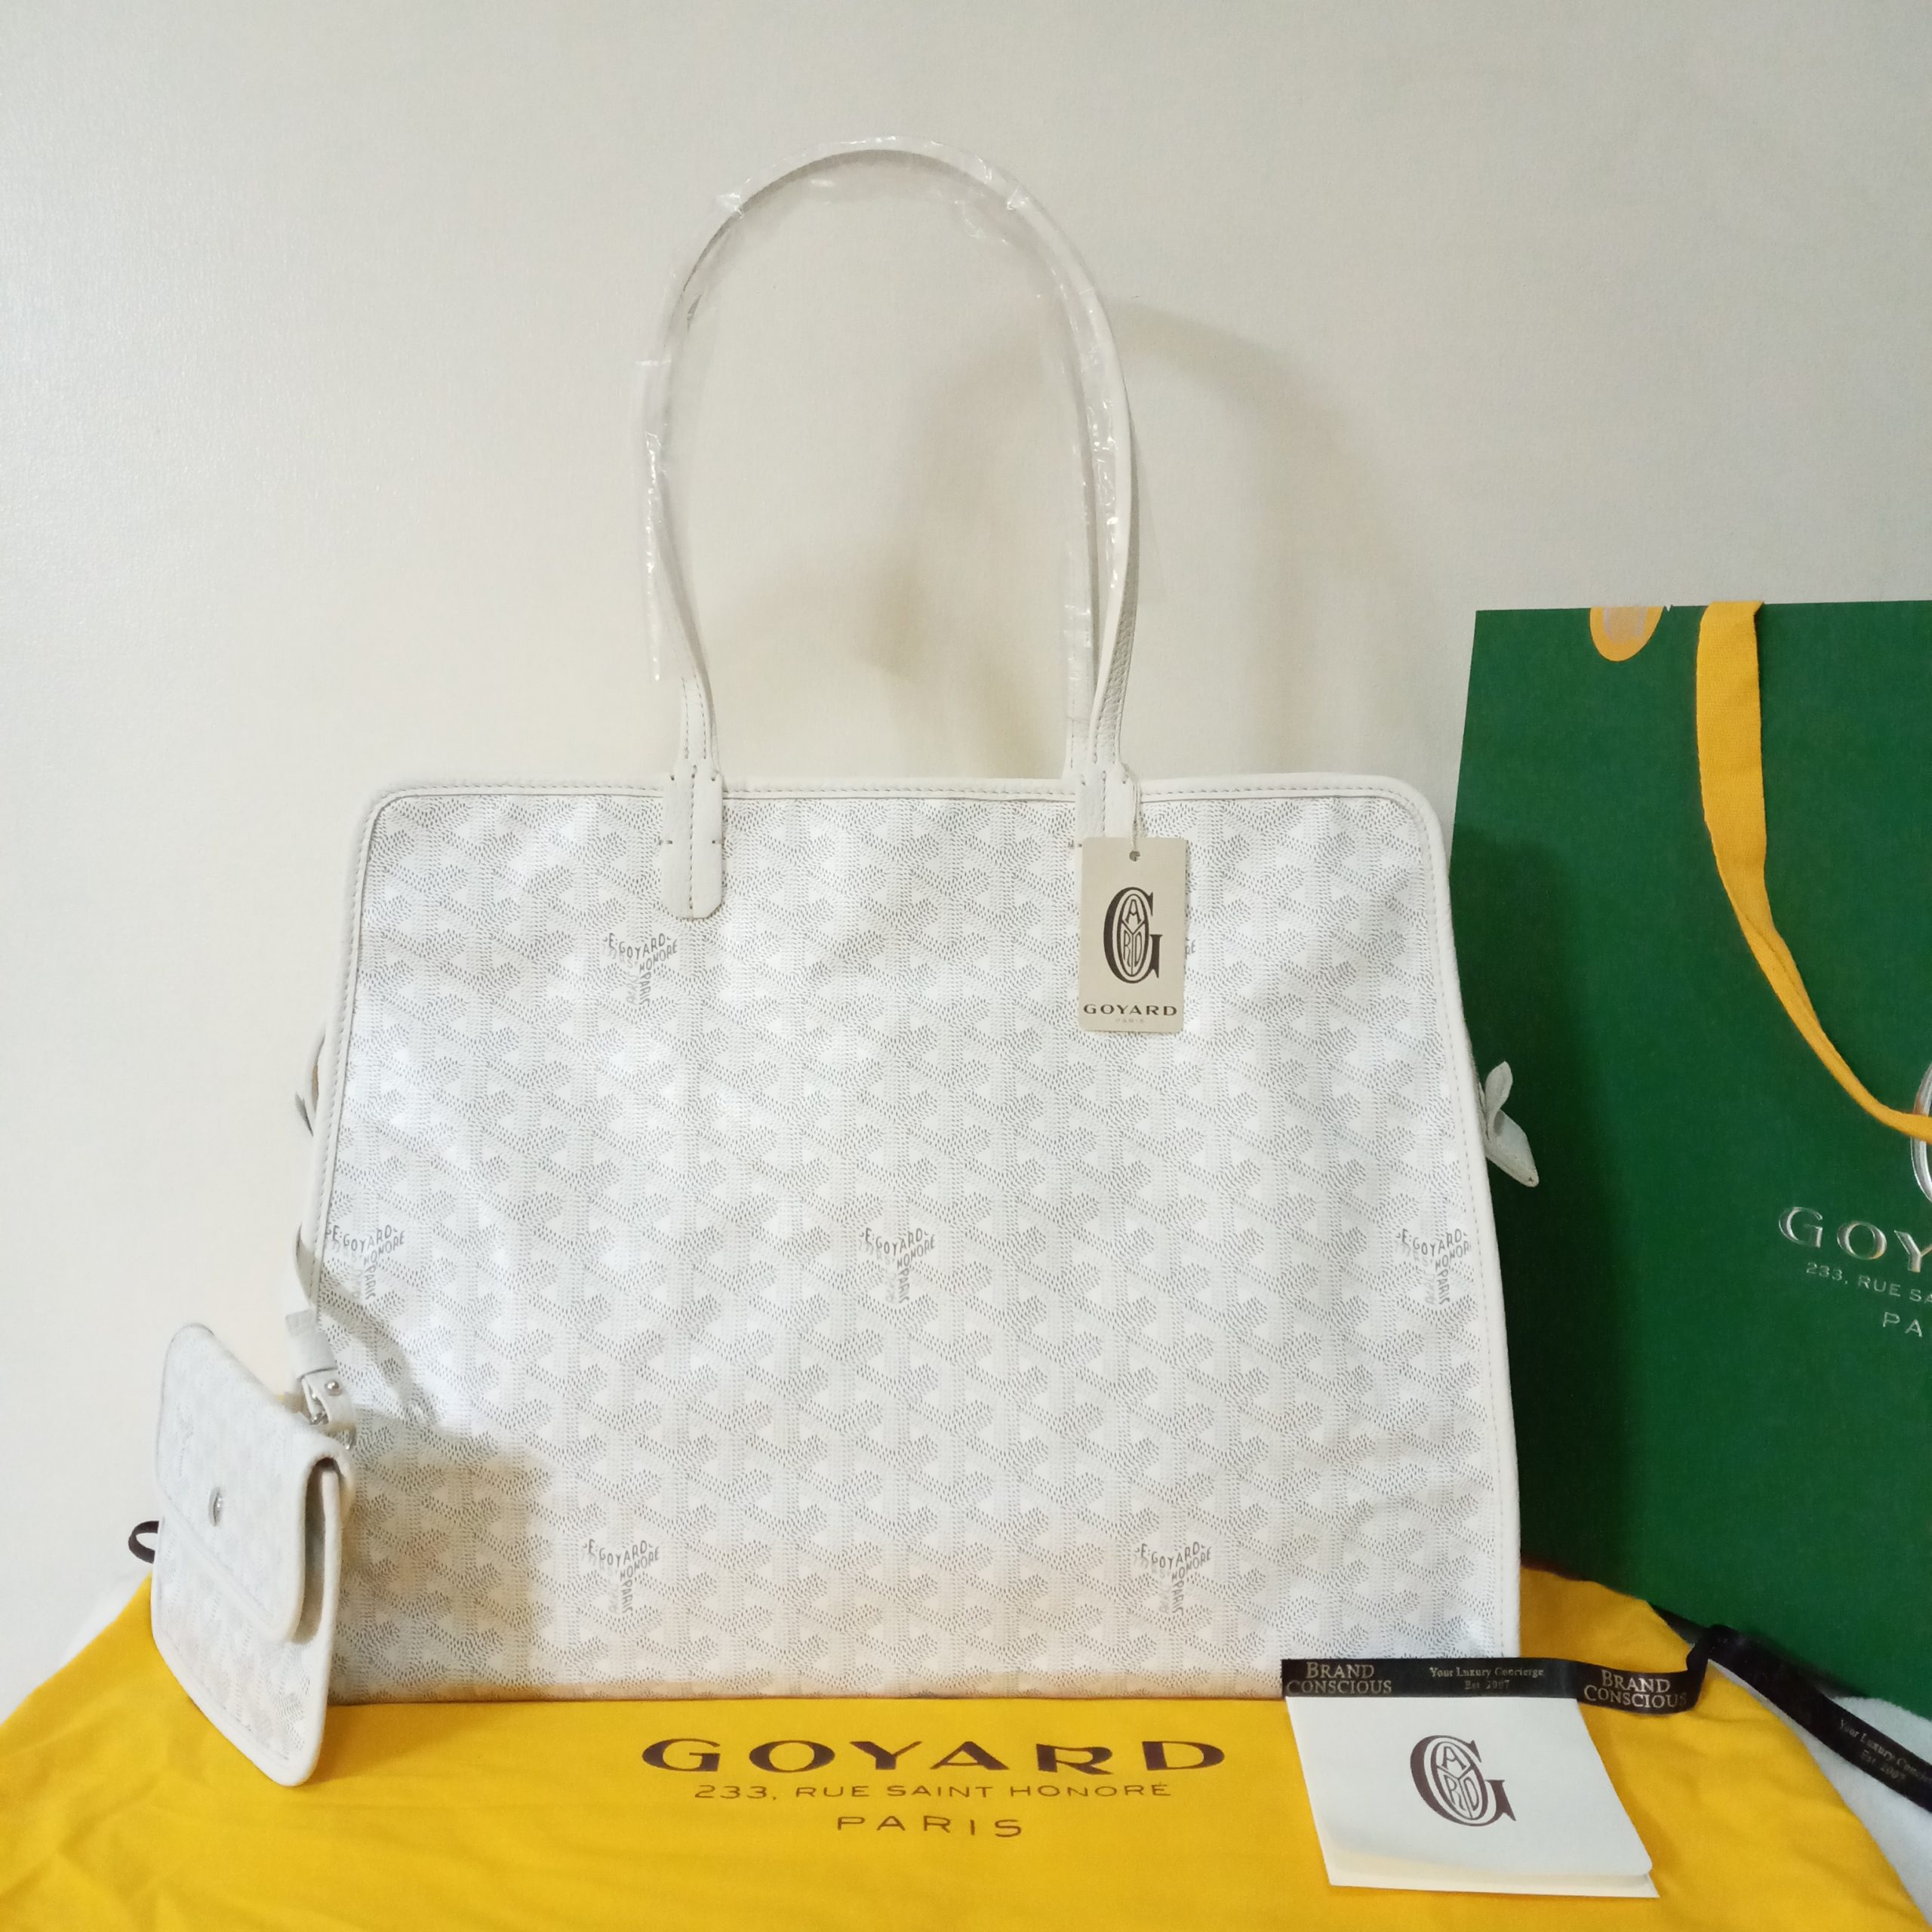 Goyard Hardy Bag Price Slovakia, SAVE 30% 